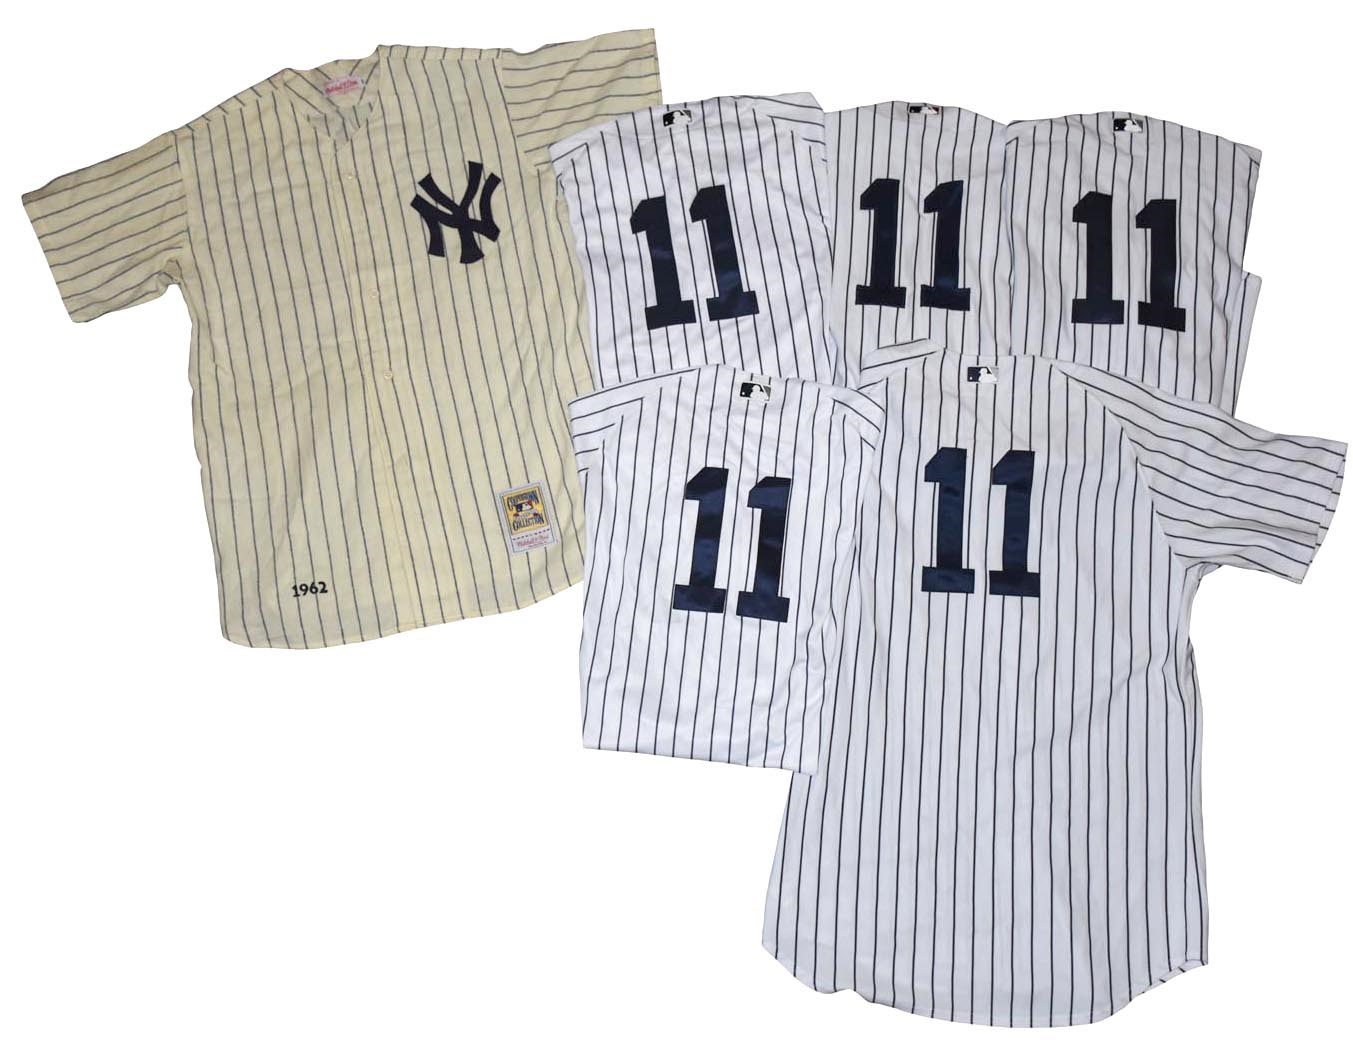 Hector Lopez NY Yankees Uniform Collection (16 Pieces)